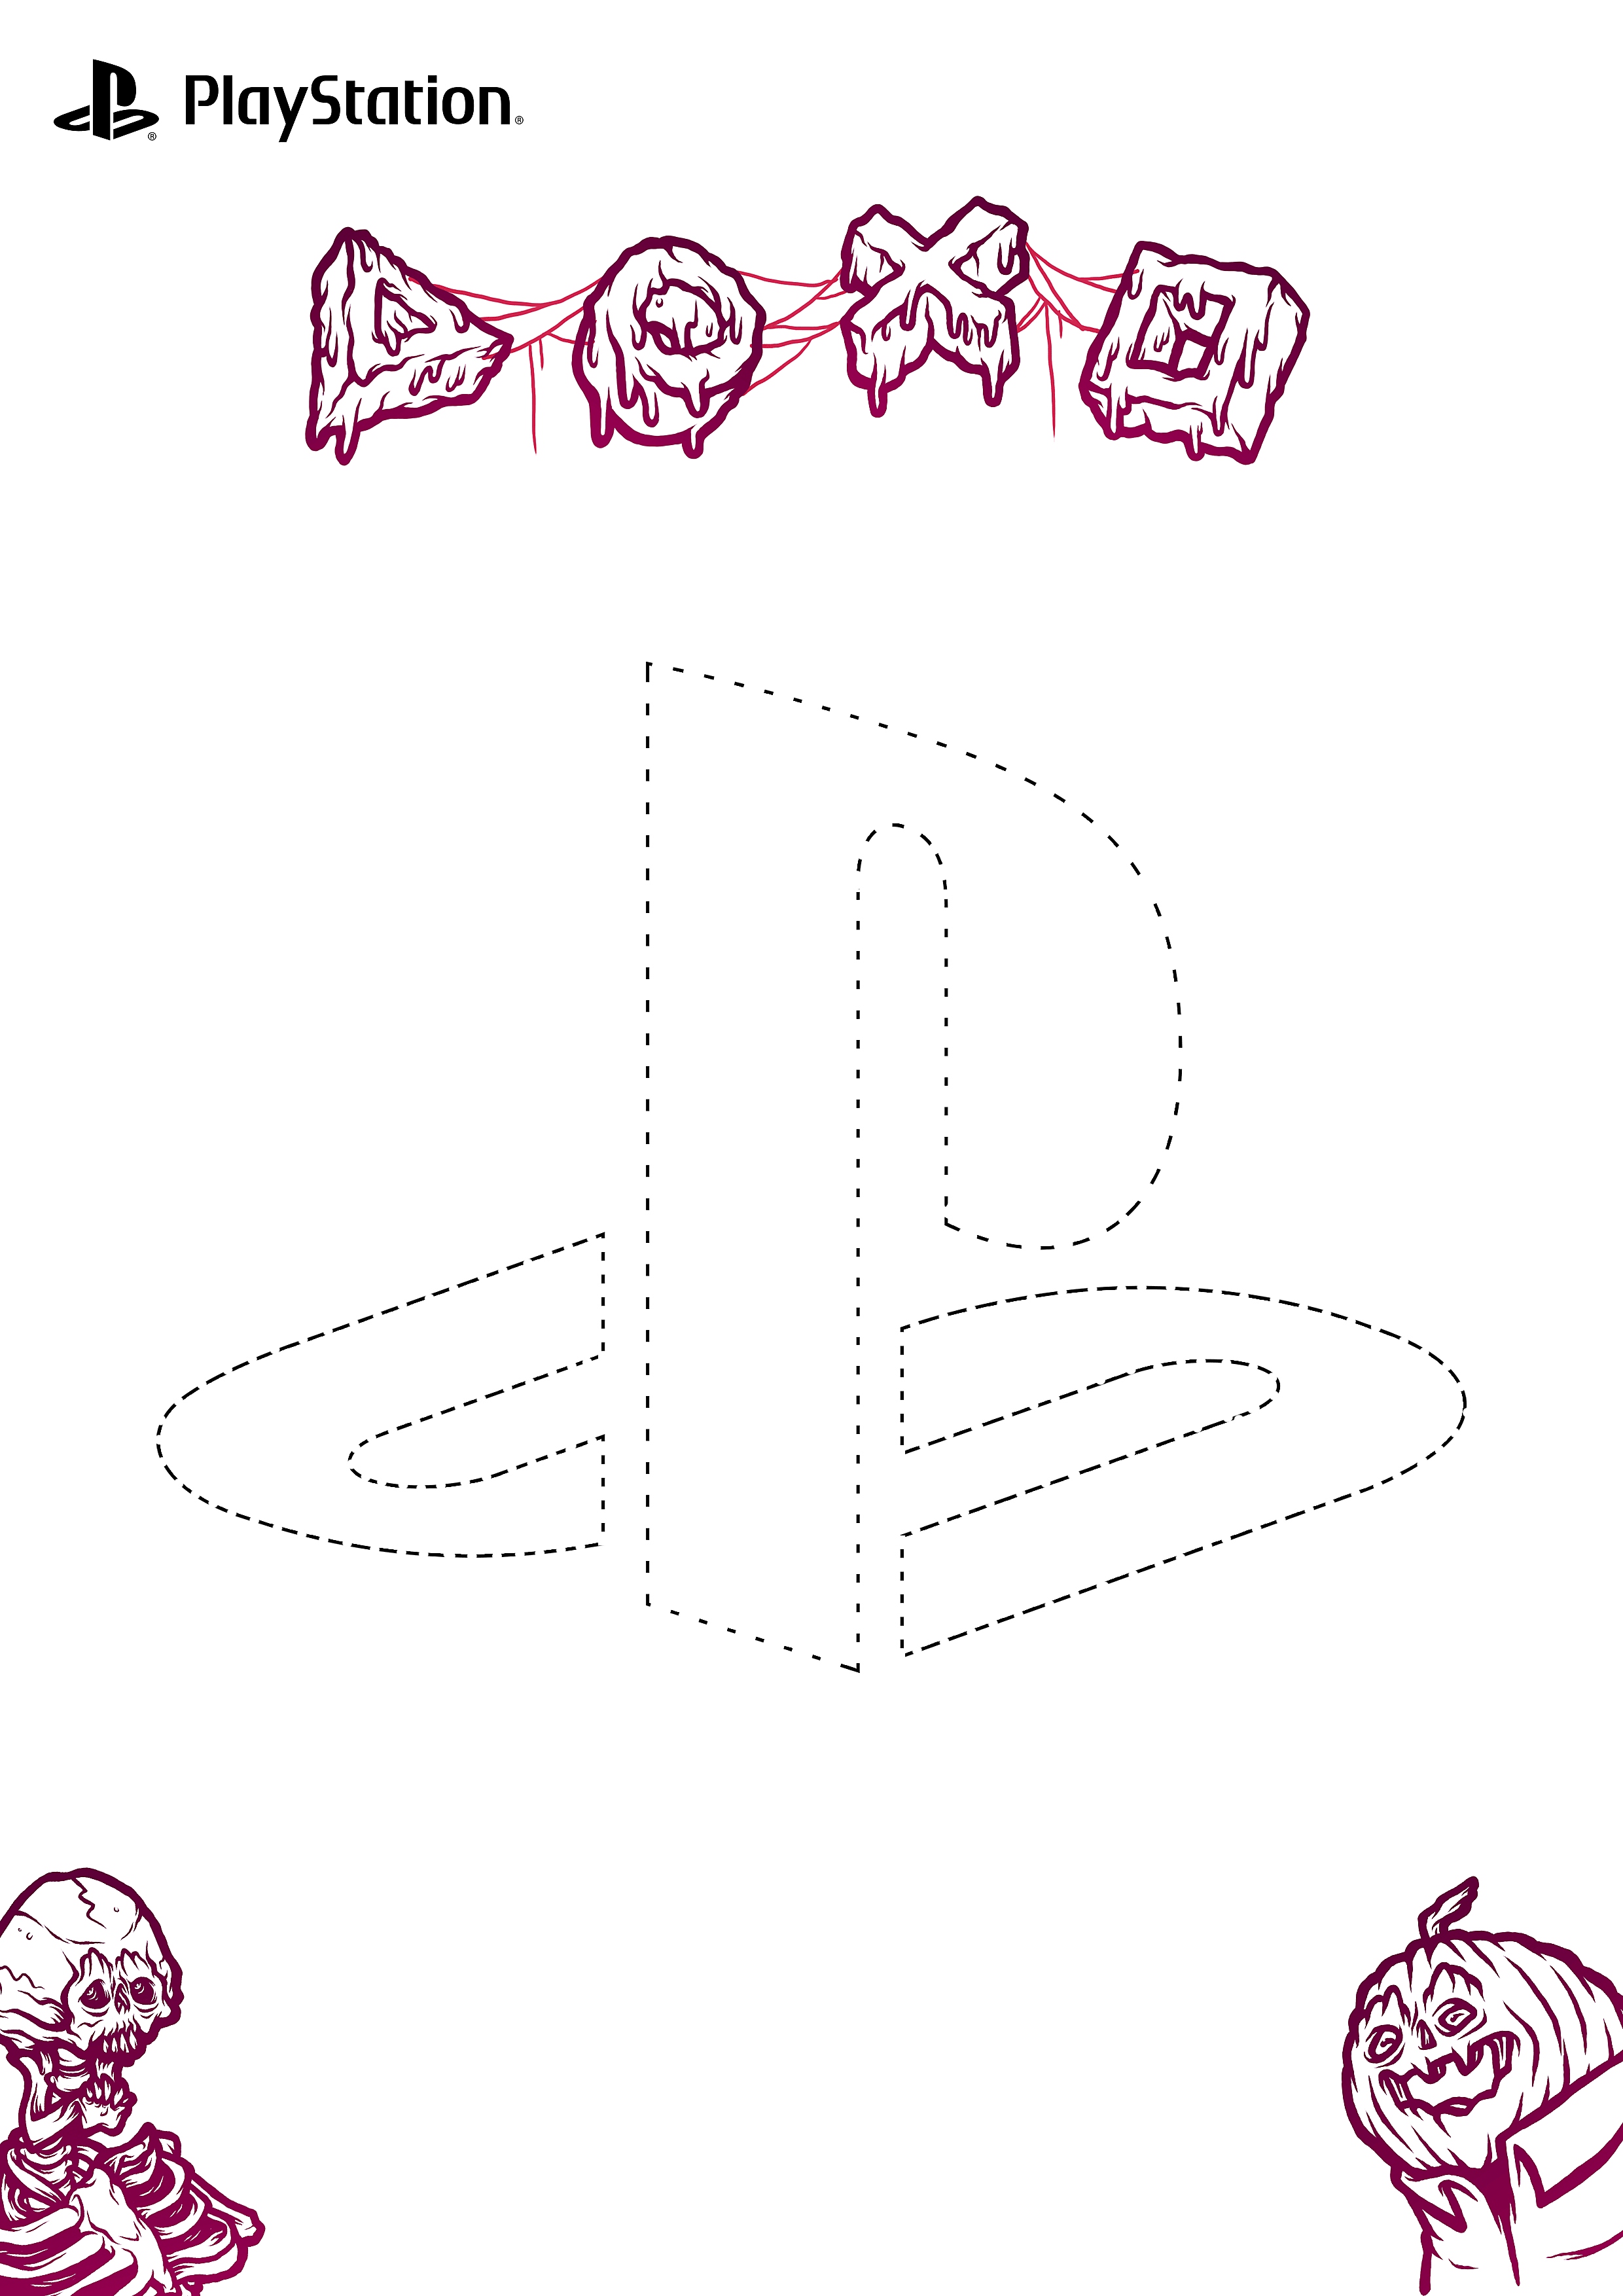 Pompoen-snijstencil met PlayStation-thema